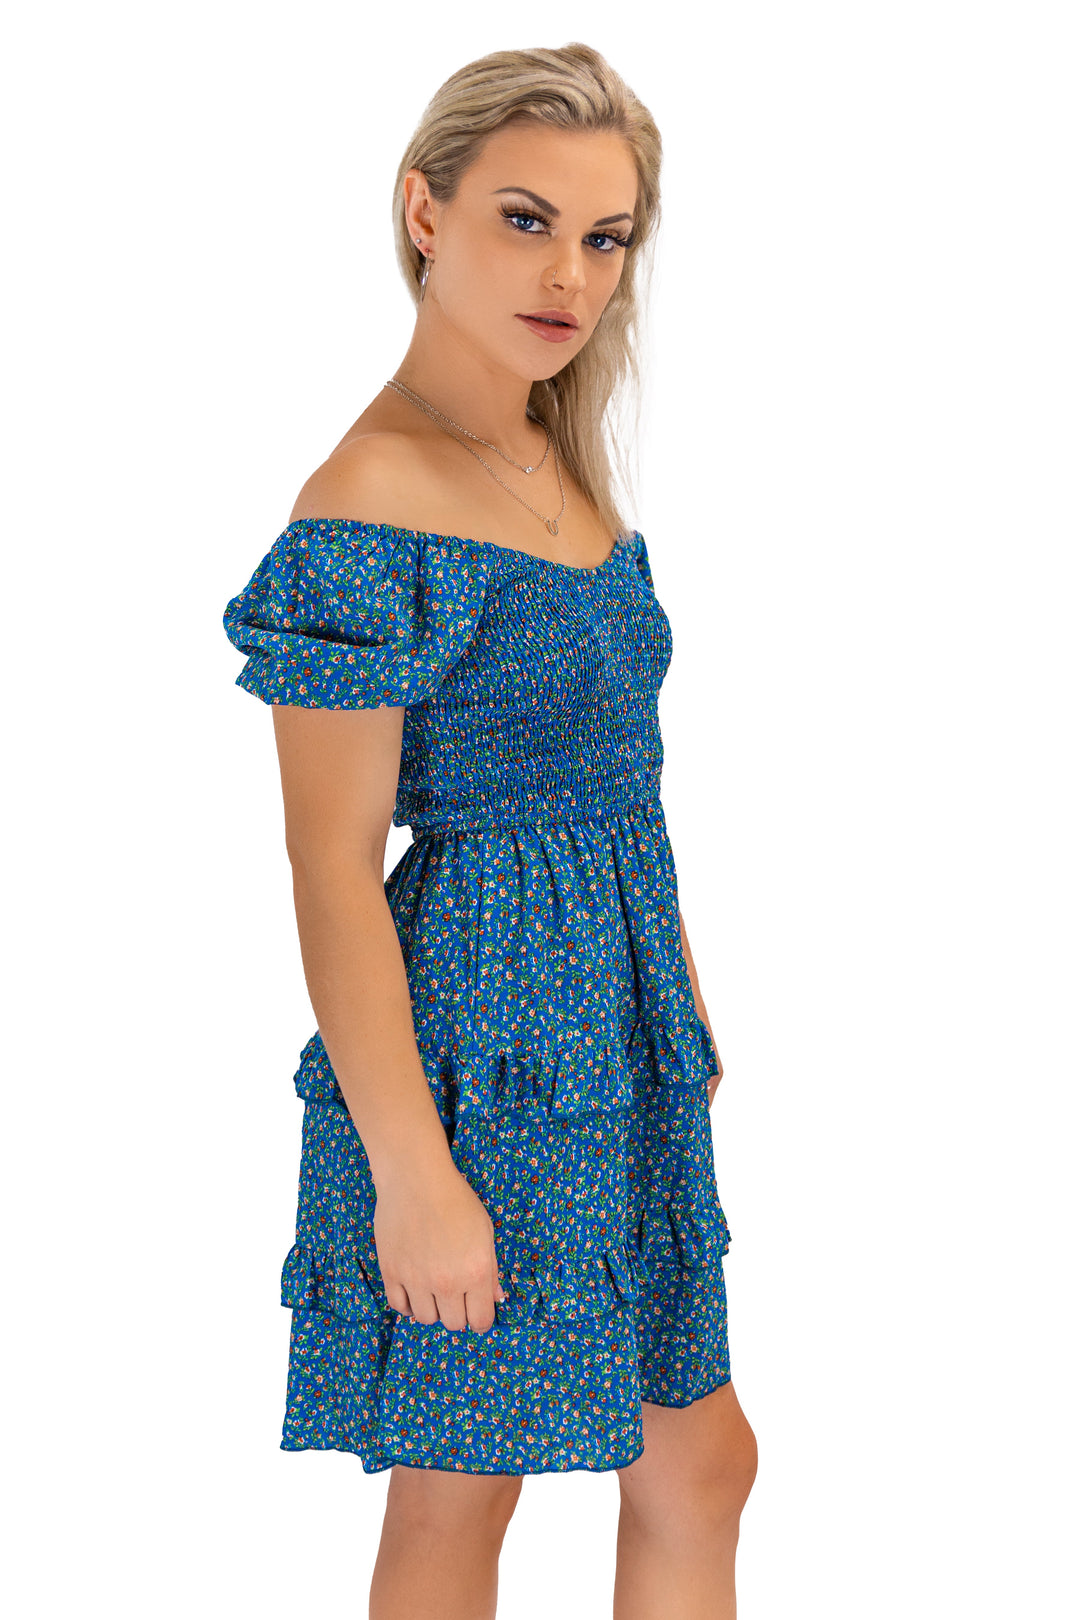 Breezy Blooms: Blue Off-Shoulder Ruffle Dress